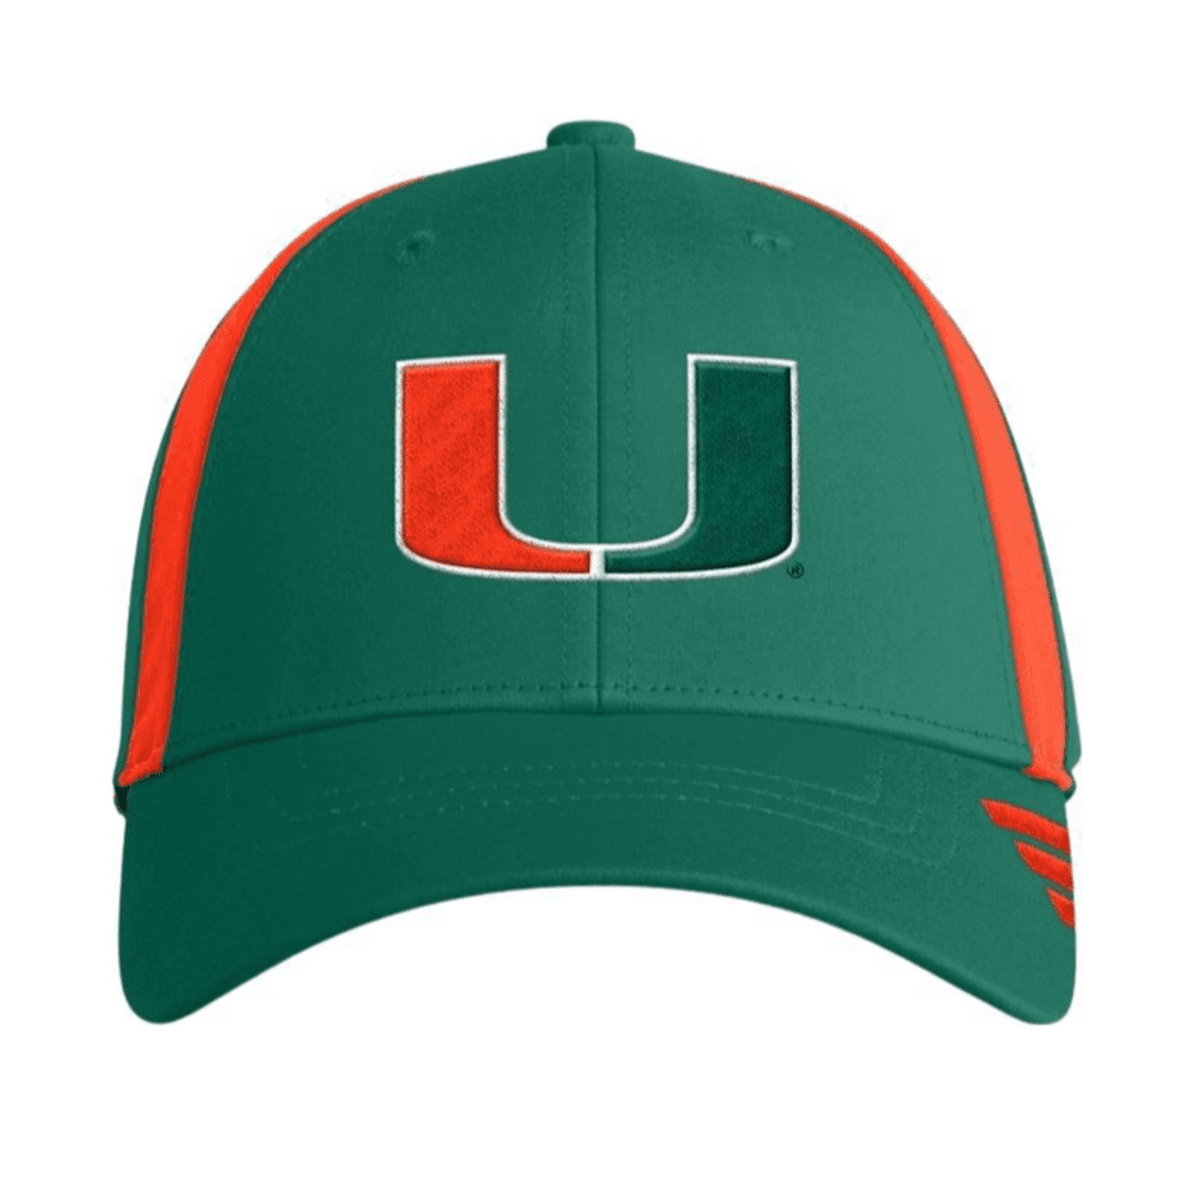 Adidas University of Miami Coaches Pack Hat